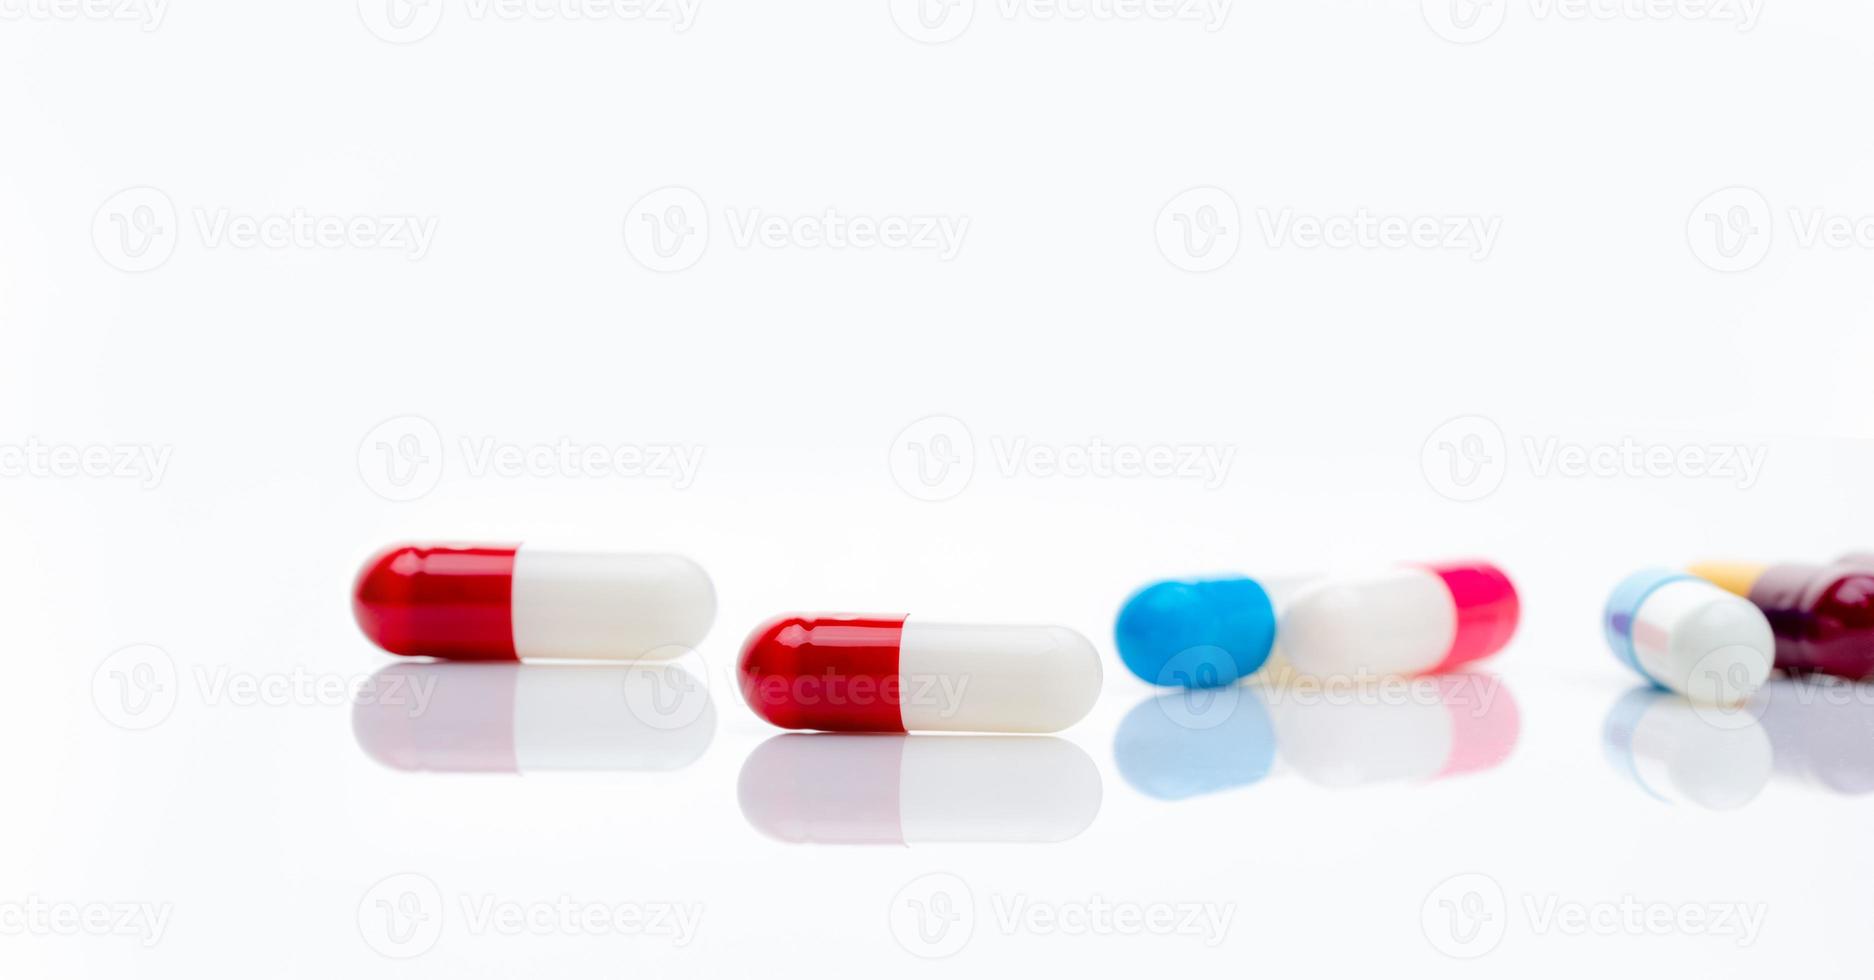 pílula de cápsula de antibiótico vermelho-branco no fundo de cápsulas multicoloridas desfocadas. conceito de resistência a antibióticos. banner horizontal de farmácia. medicamentos prescritos. indústria farmacêutica. cuidados de saúde. foto